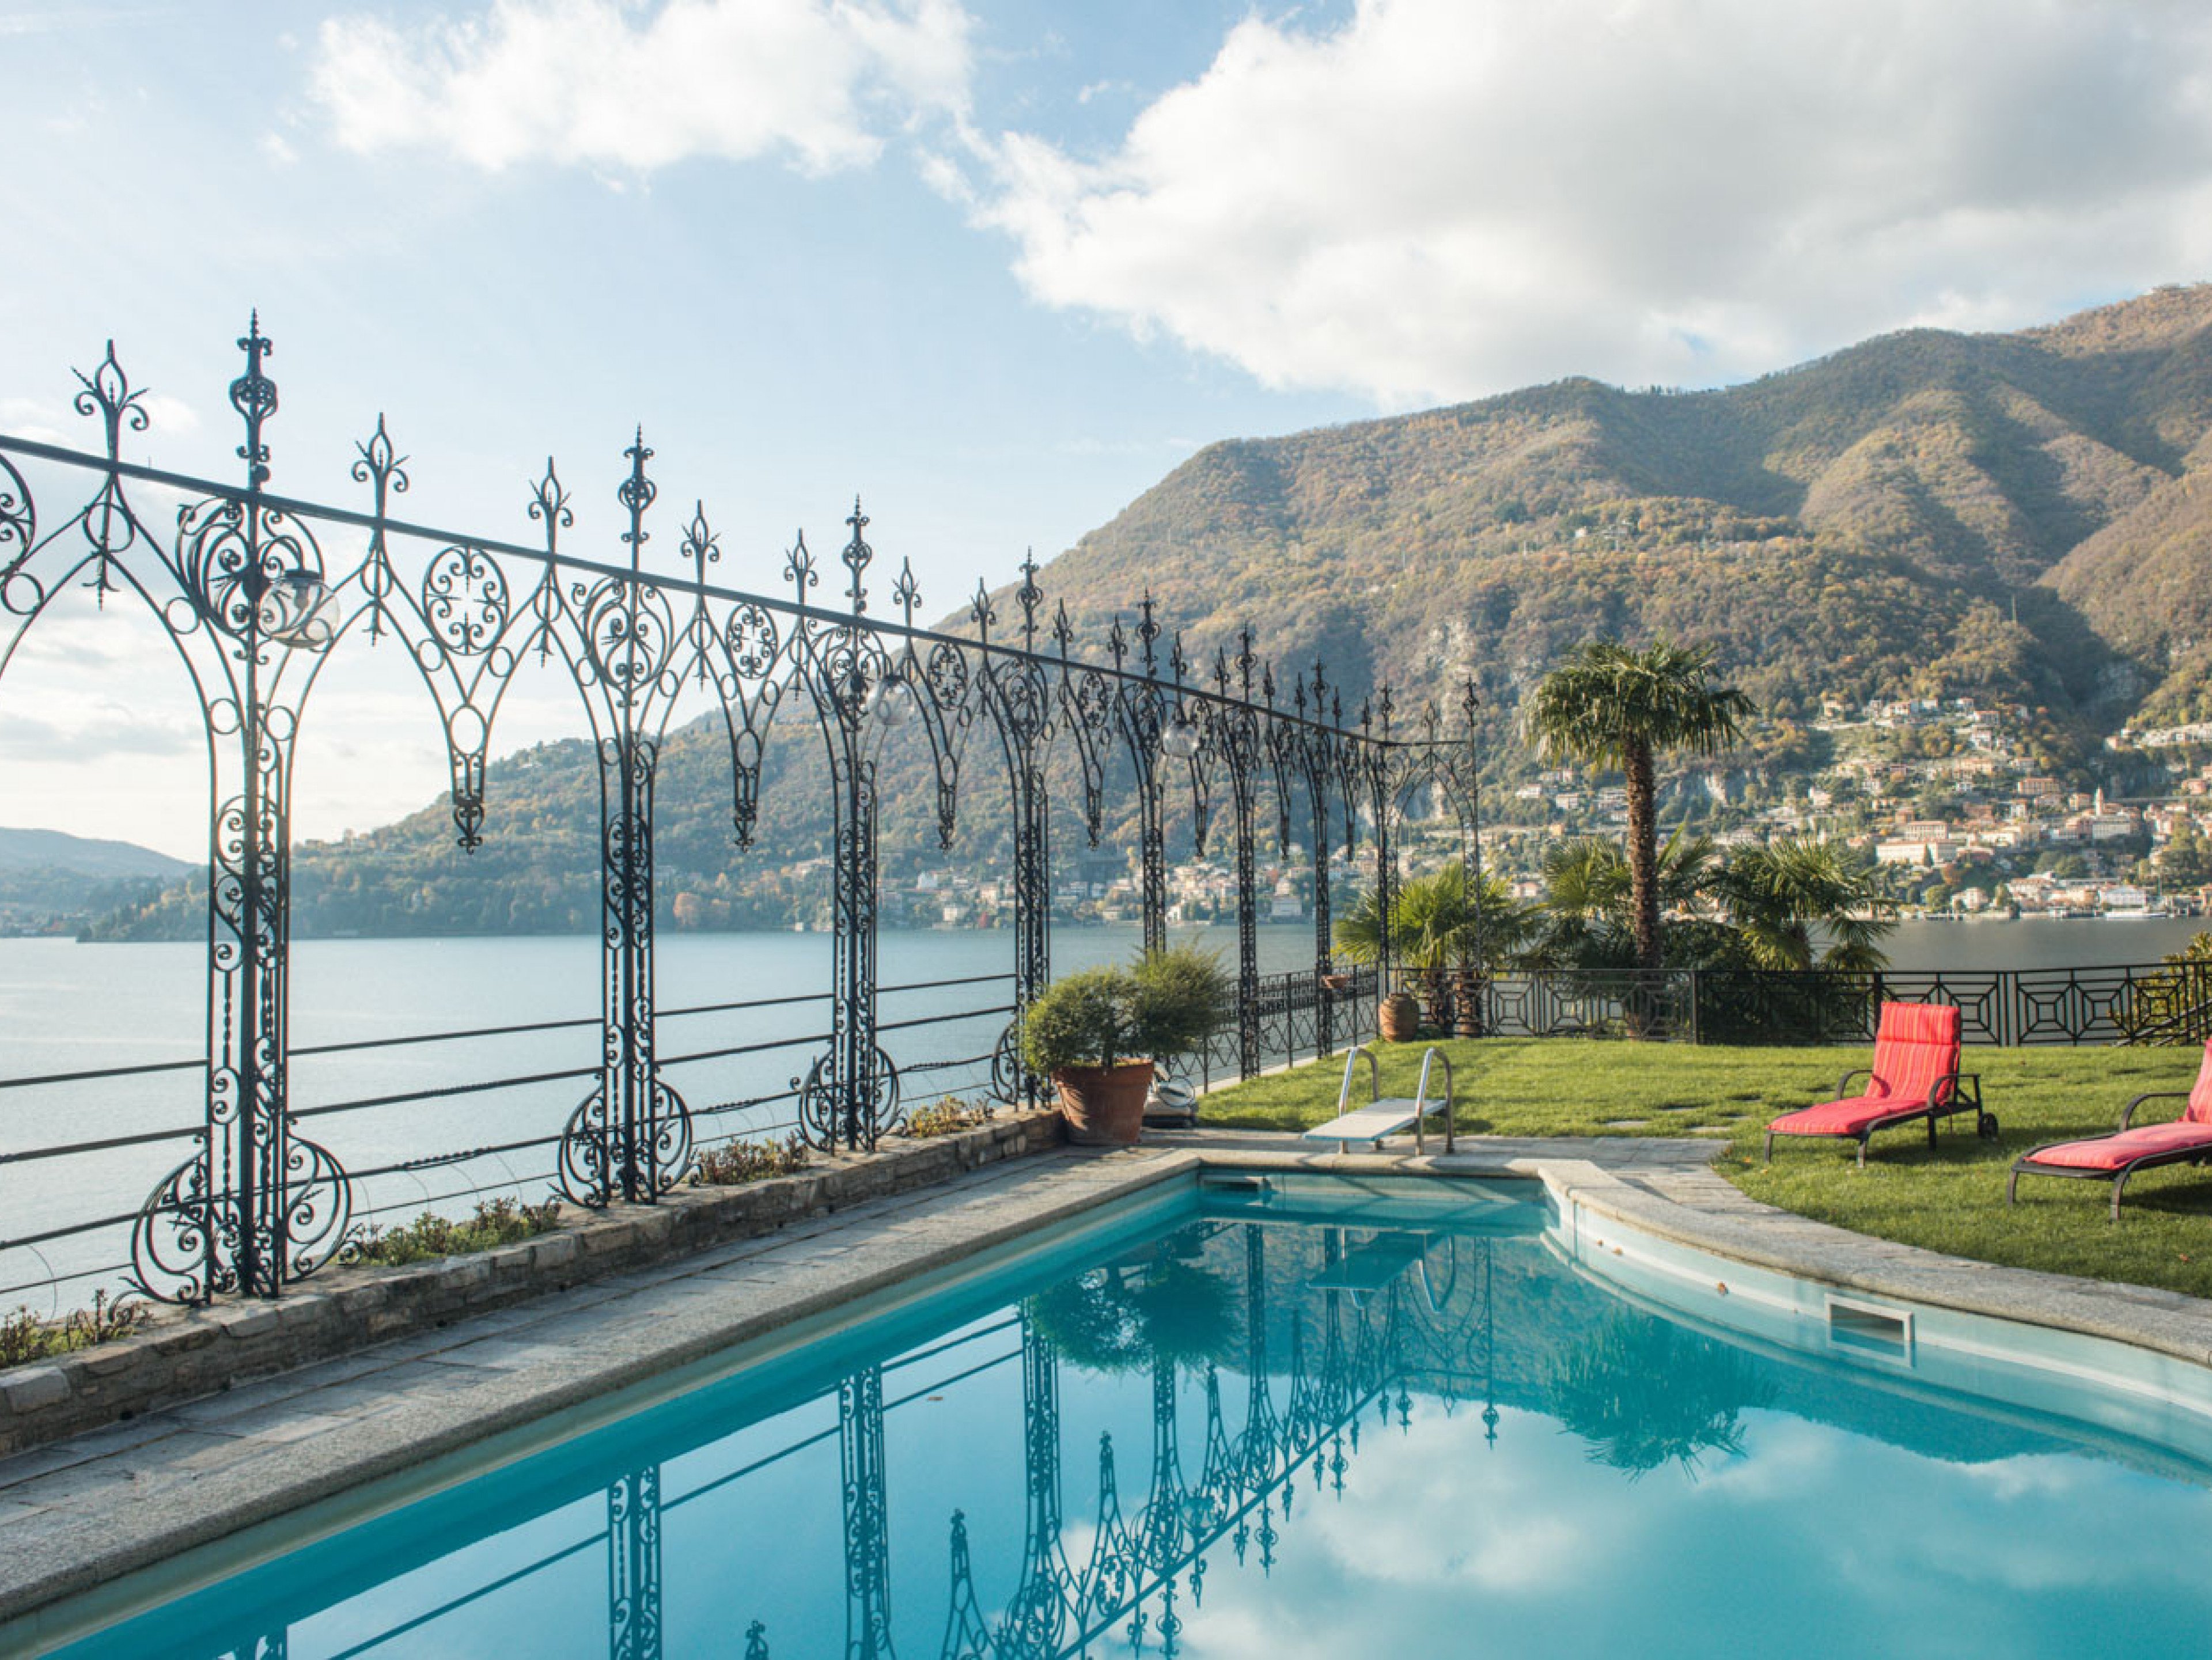 Lake Como villa rentals with pools - Splendora